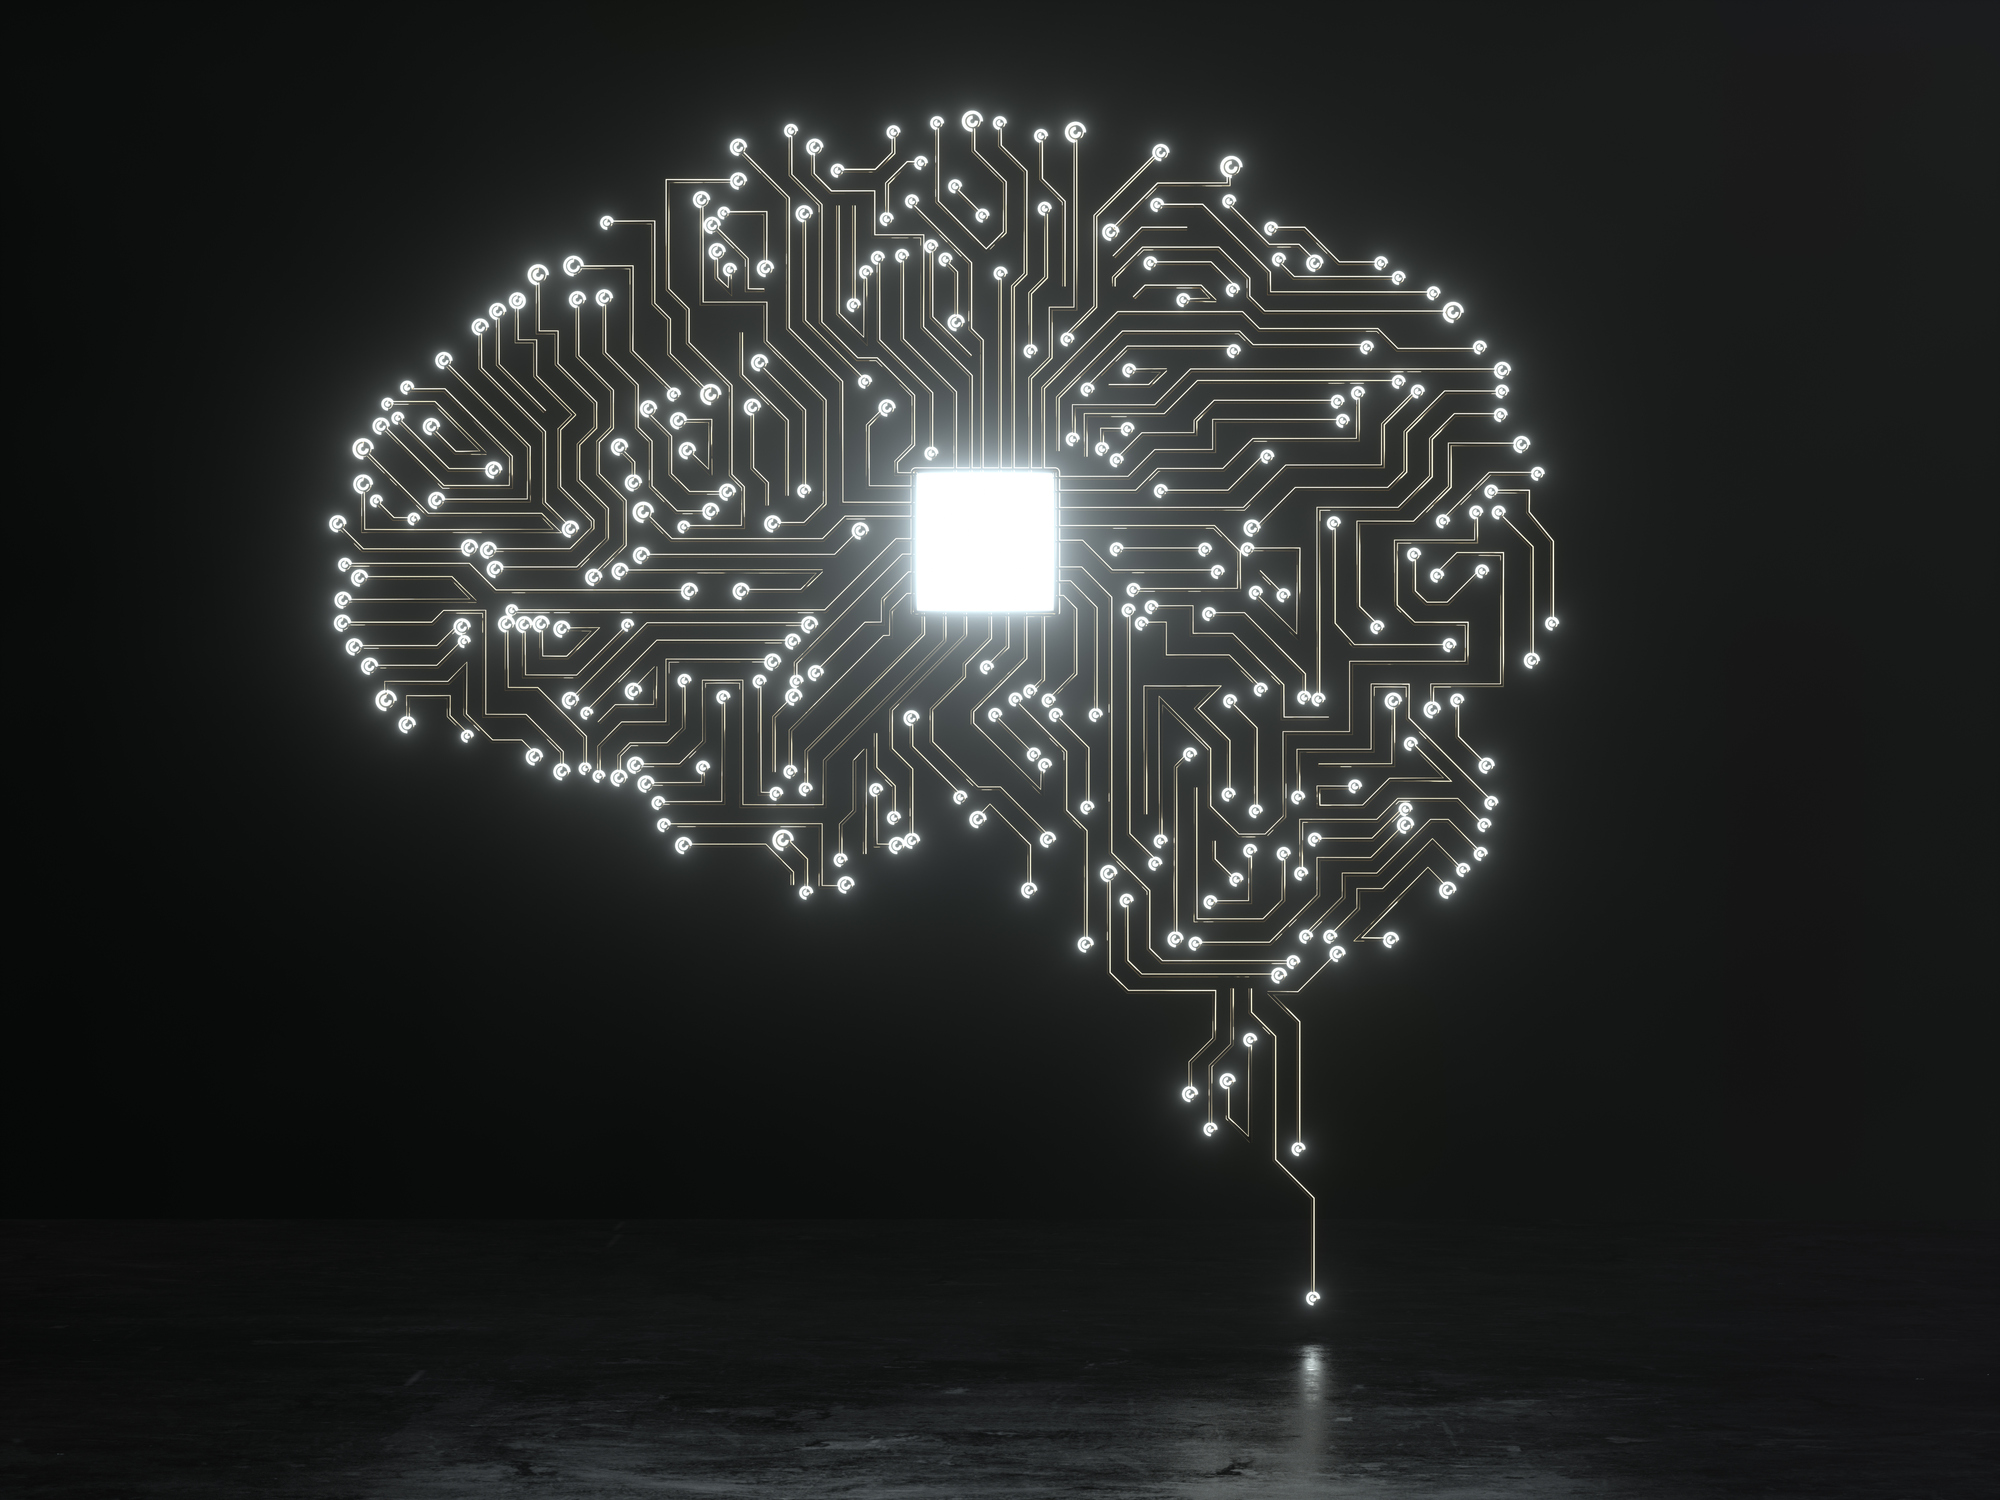 Digital image of artificial intelligence human brain on black background.